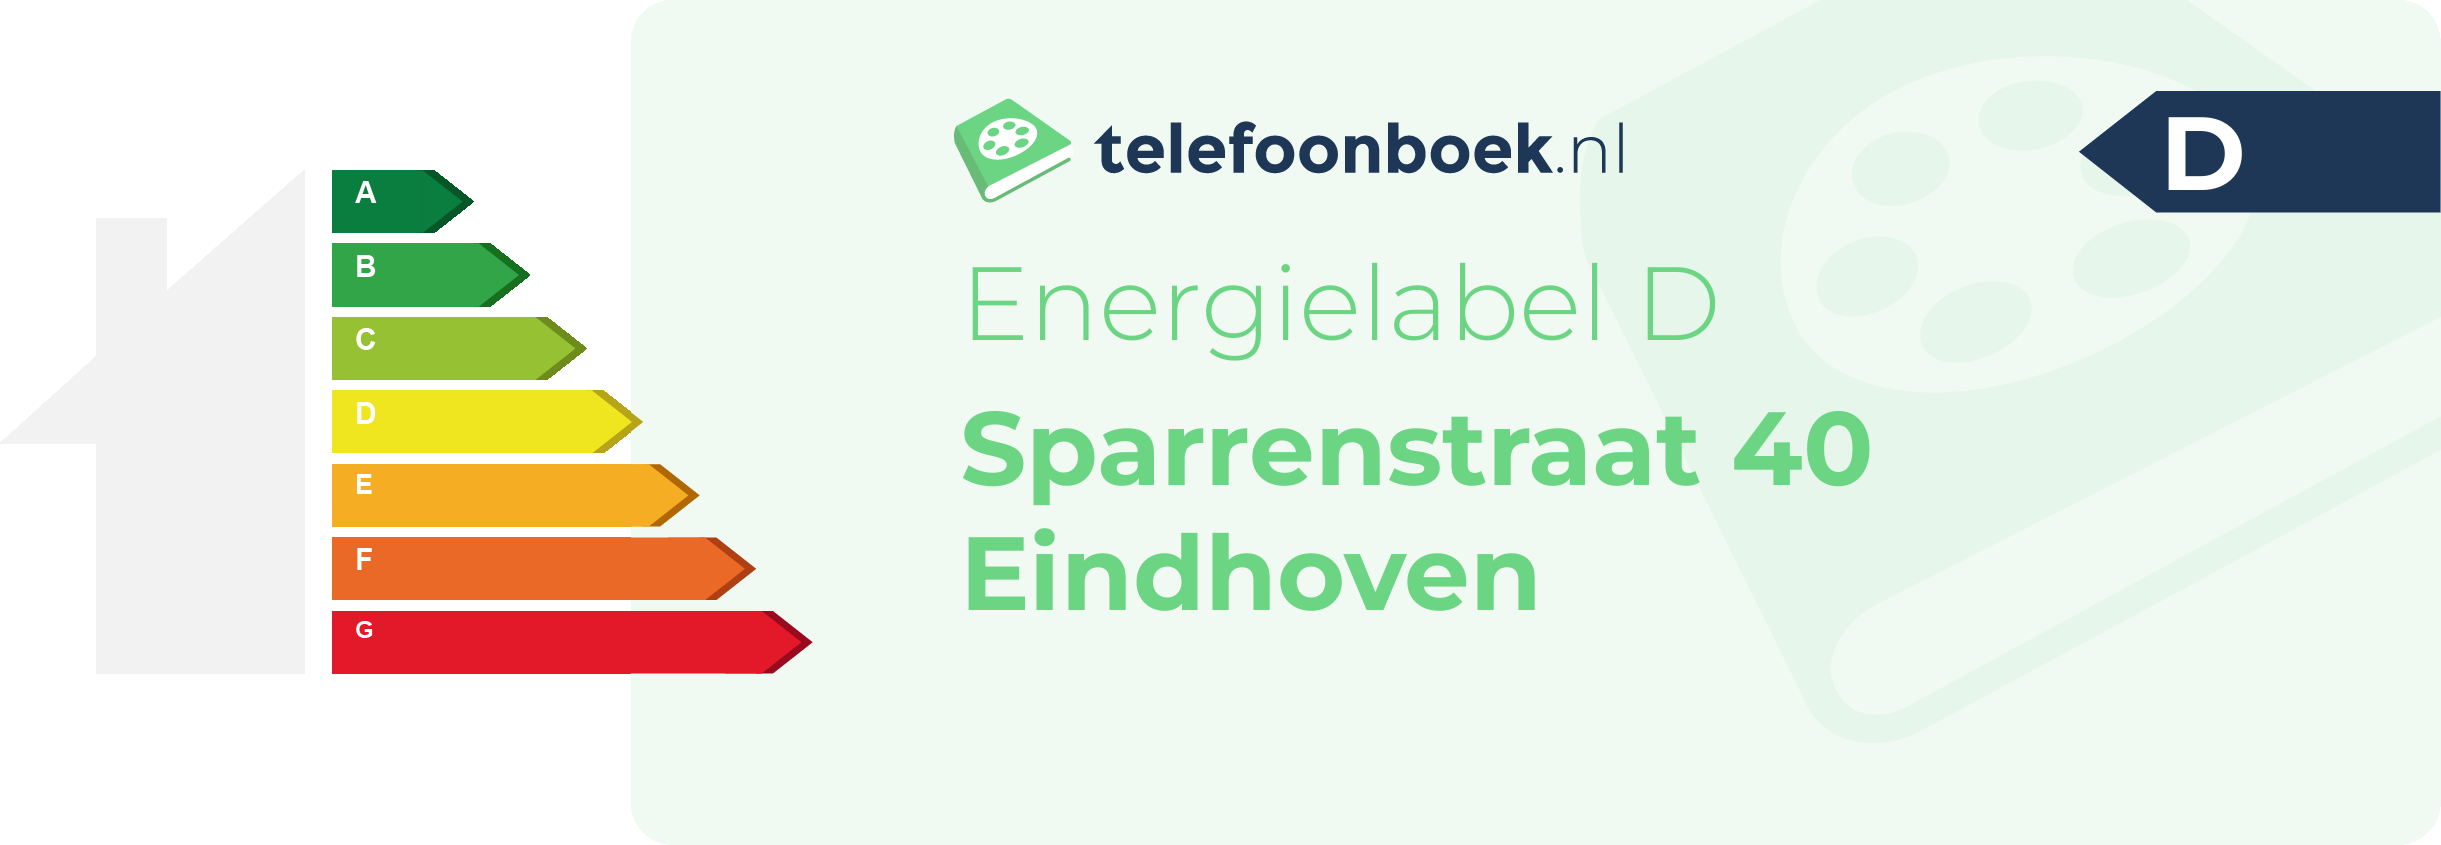 Energielabel Sparrenstraat 40 Eindhoven